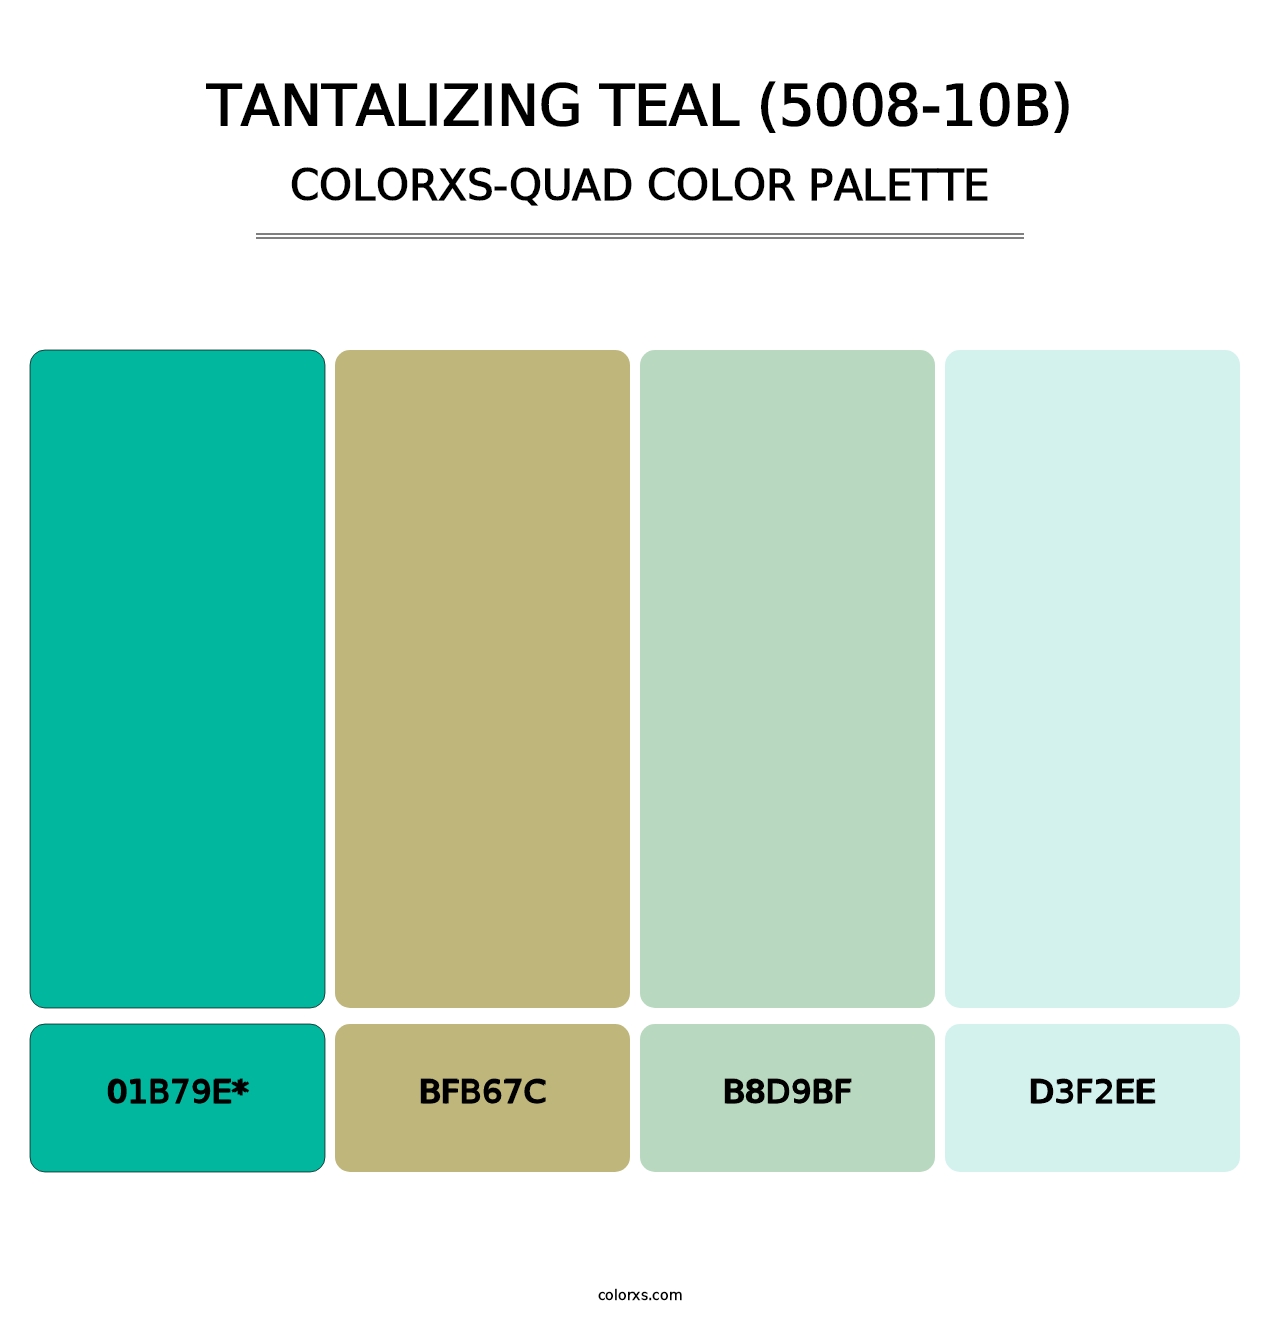 Tantalizing Teal (5008-10B) - Colorxs Quad Palette